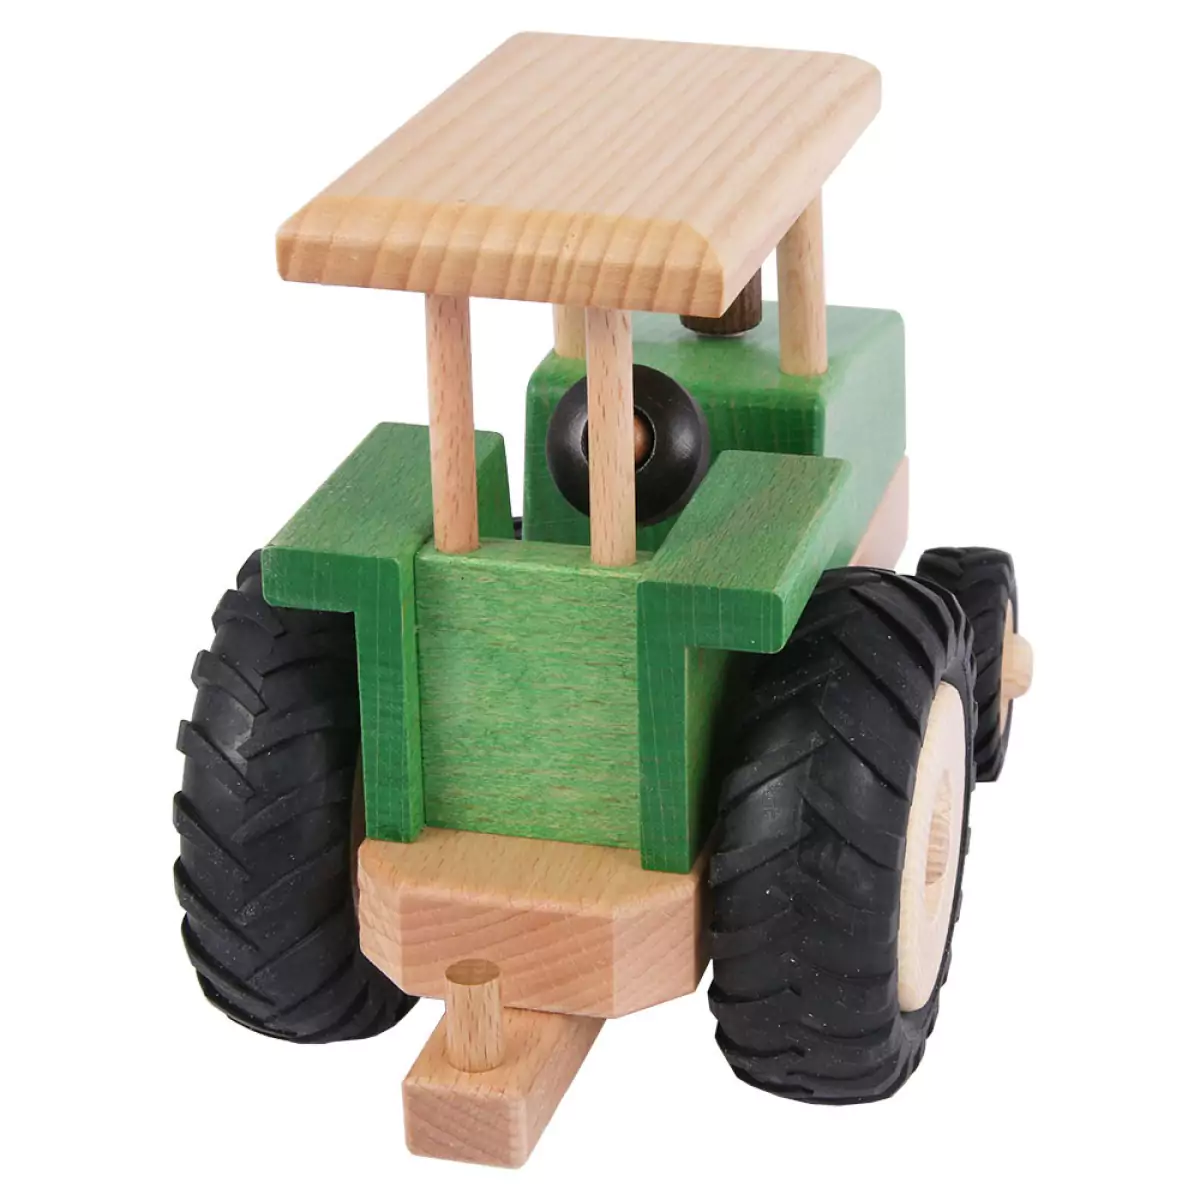 Anhänger kippbar Beck Traktor aus Holz grün lenkbar ink 10001 / 10002 